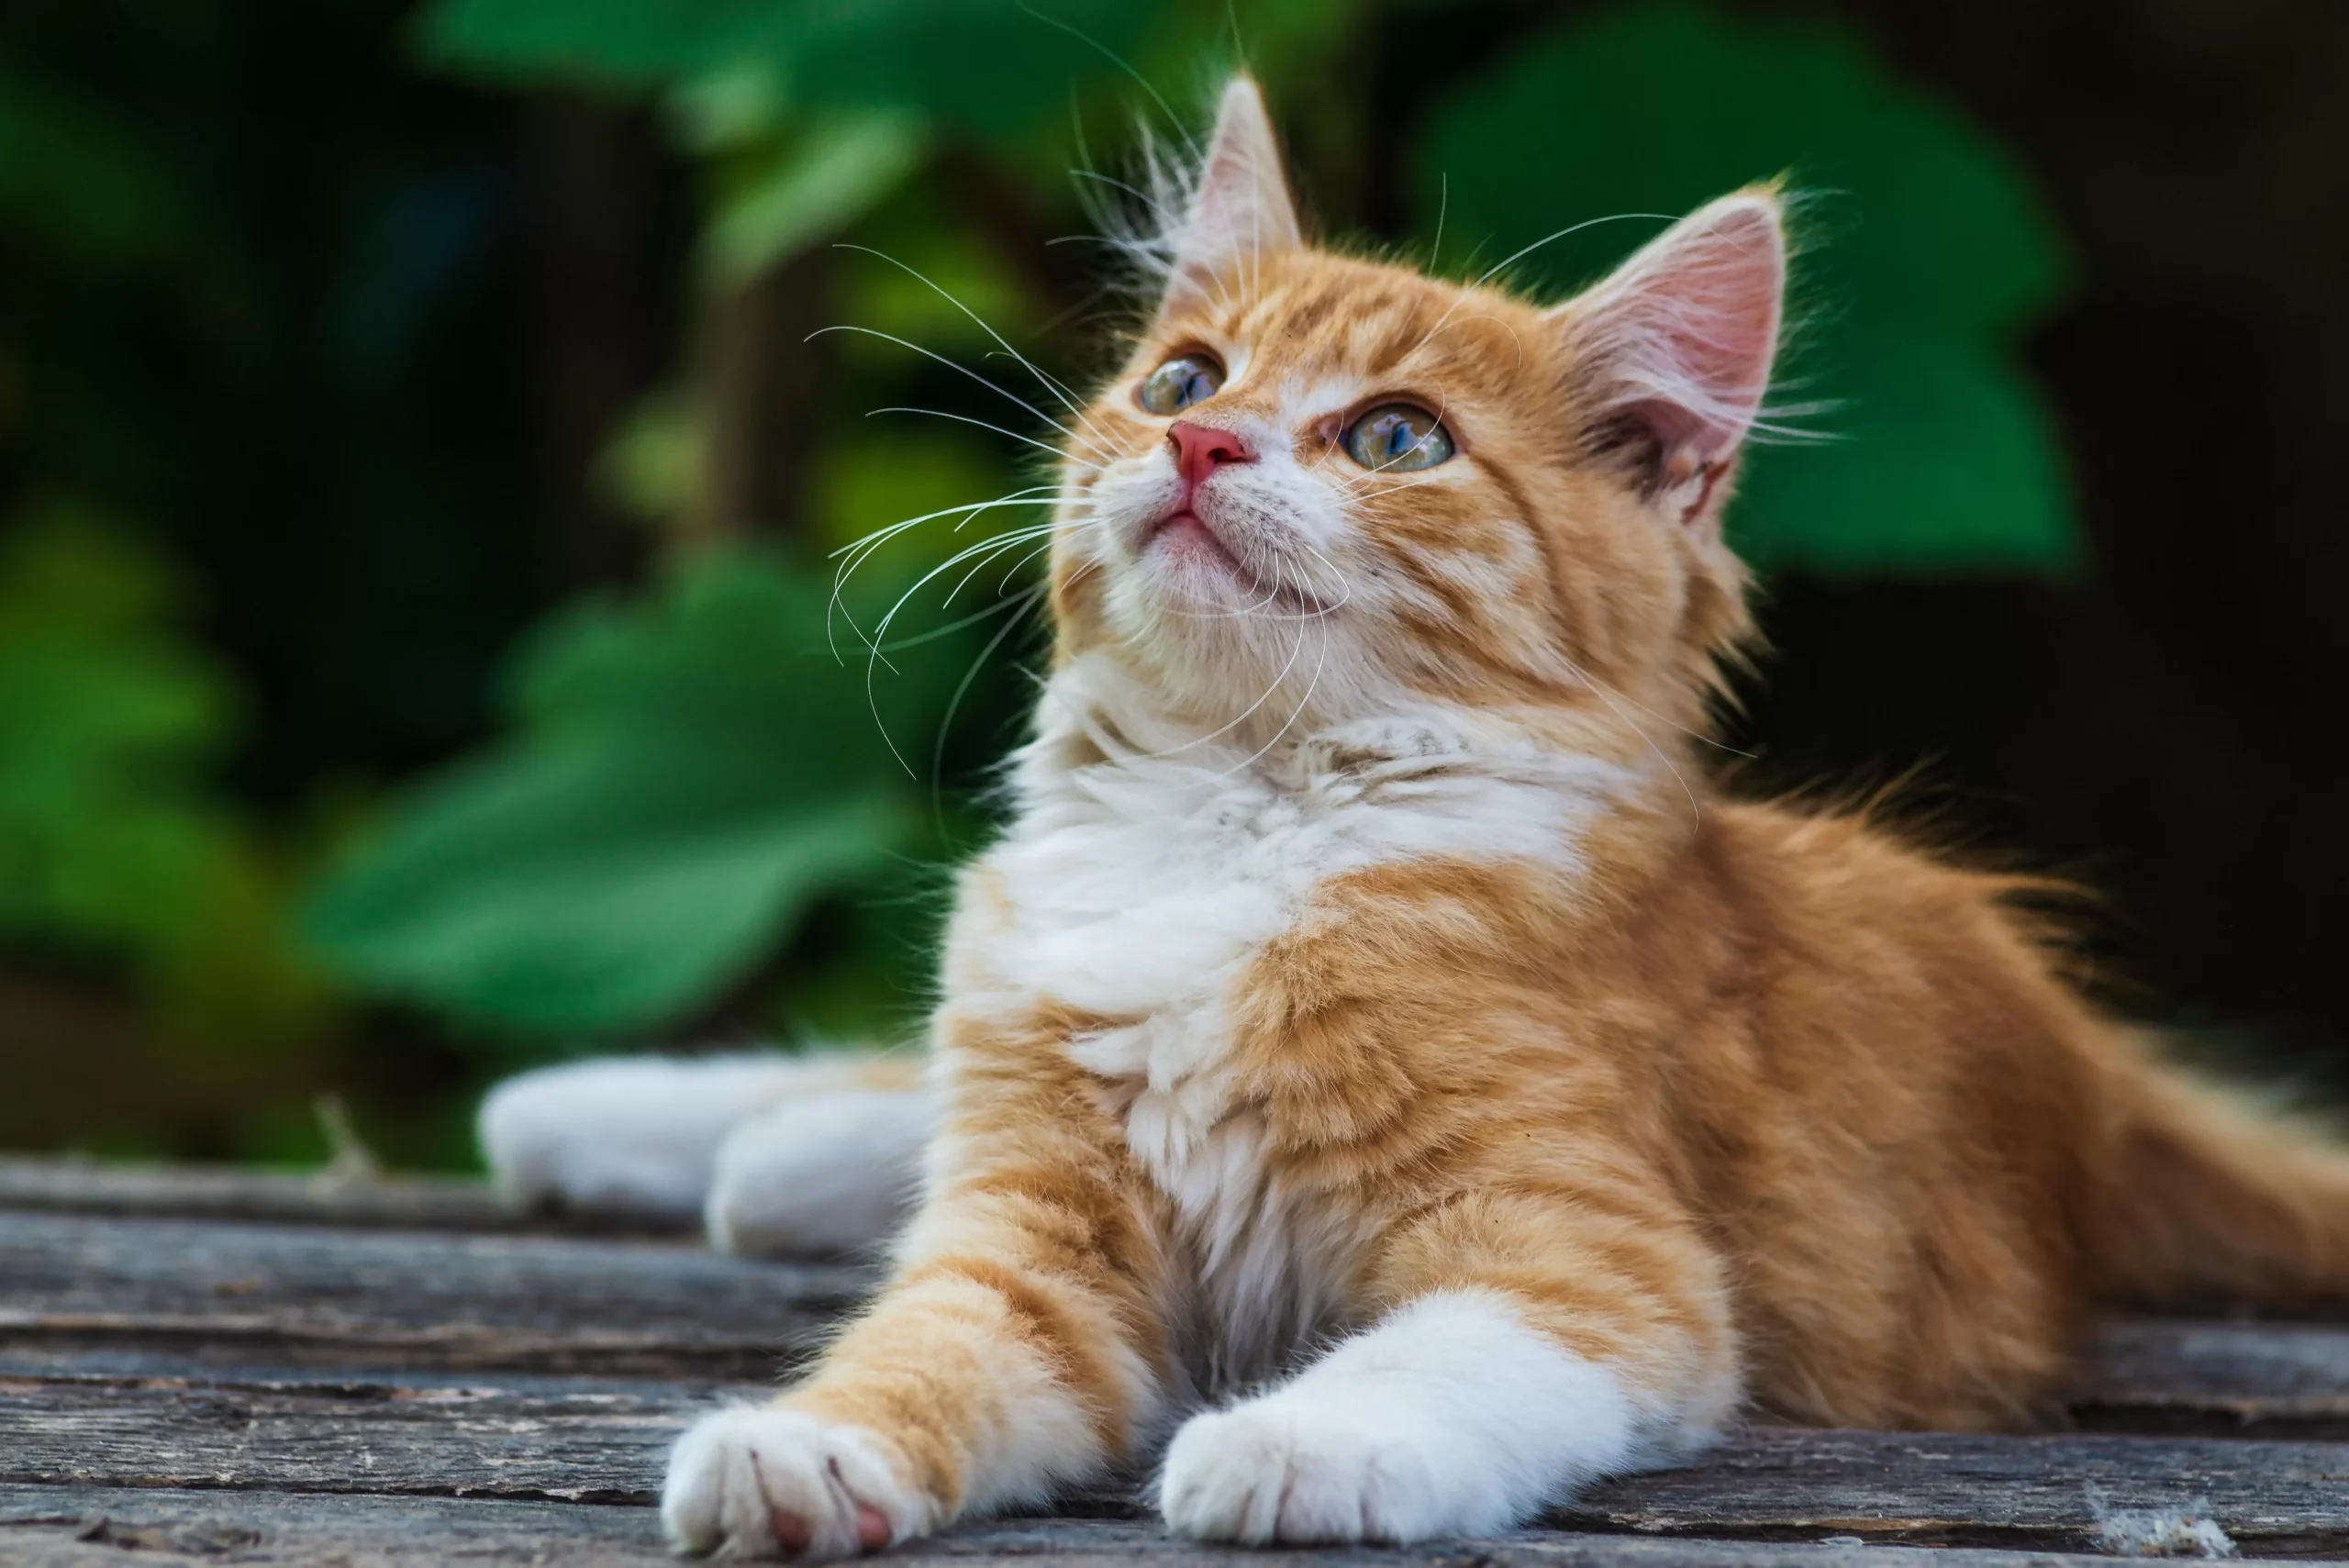 Gatos laranjas: curiosidades e personalidade